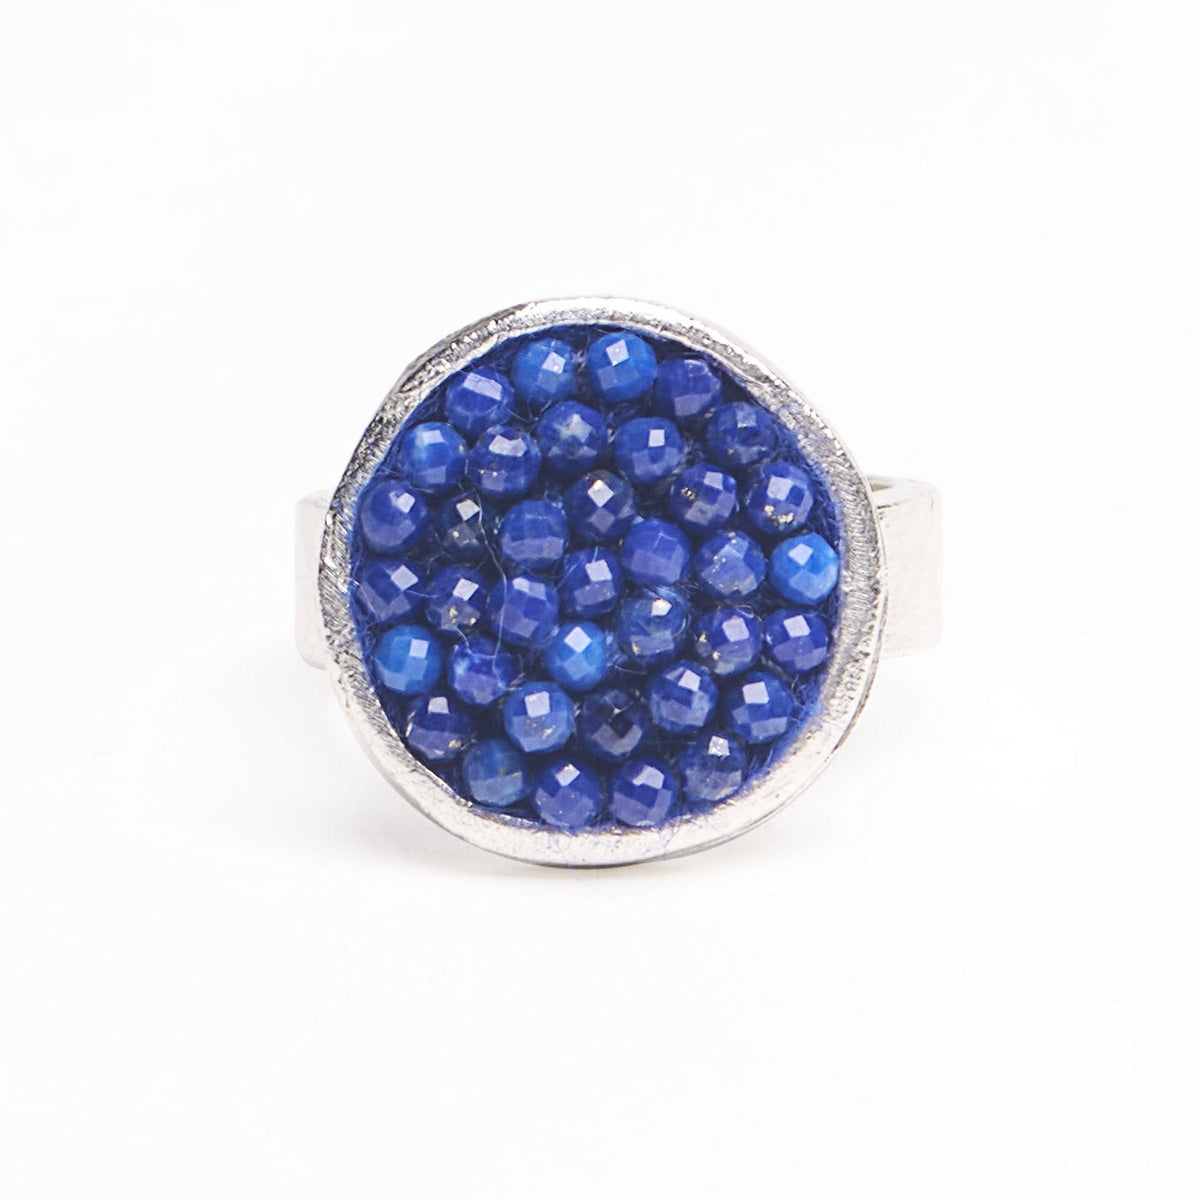 Iconic Faceted Lapis Lazuli Ring